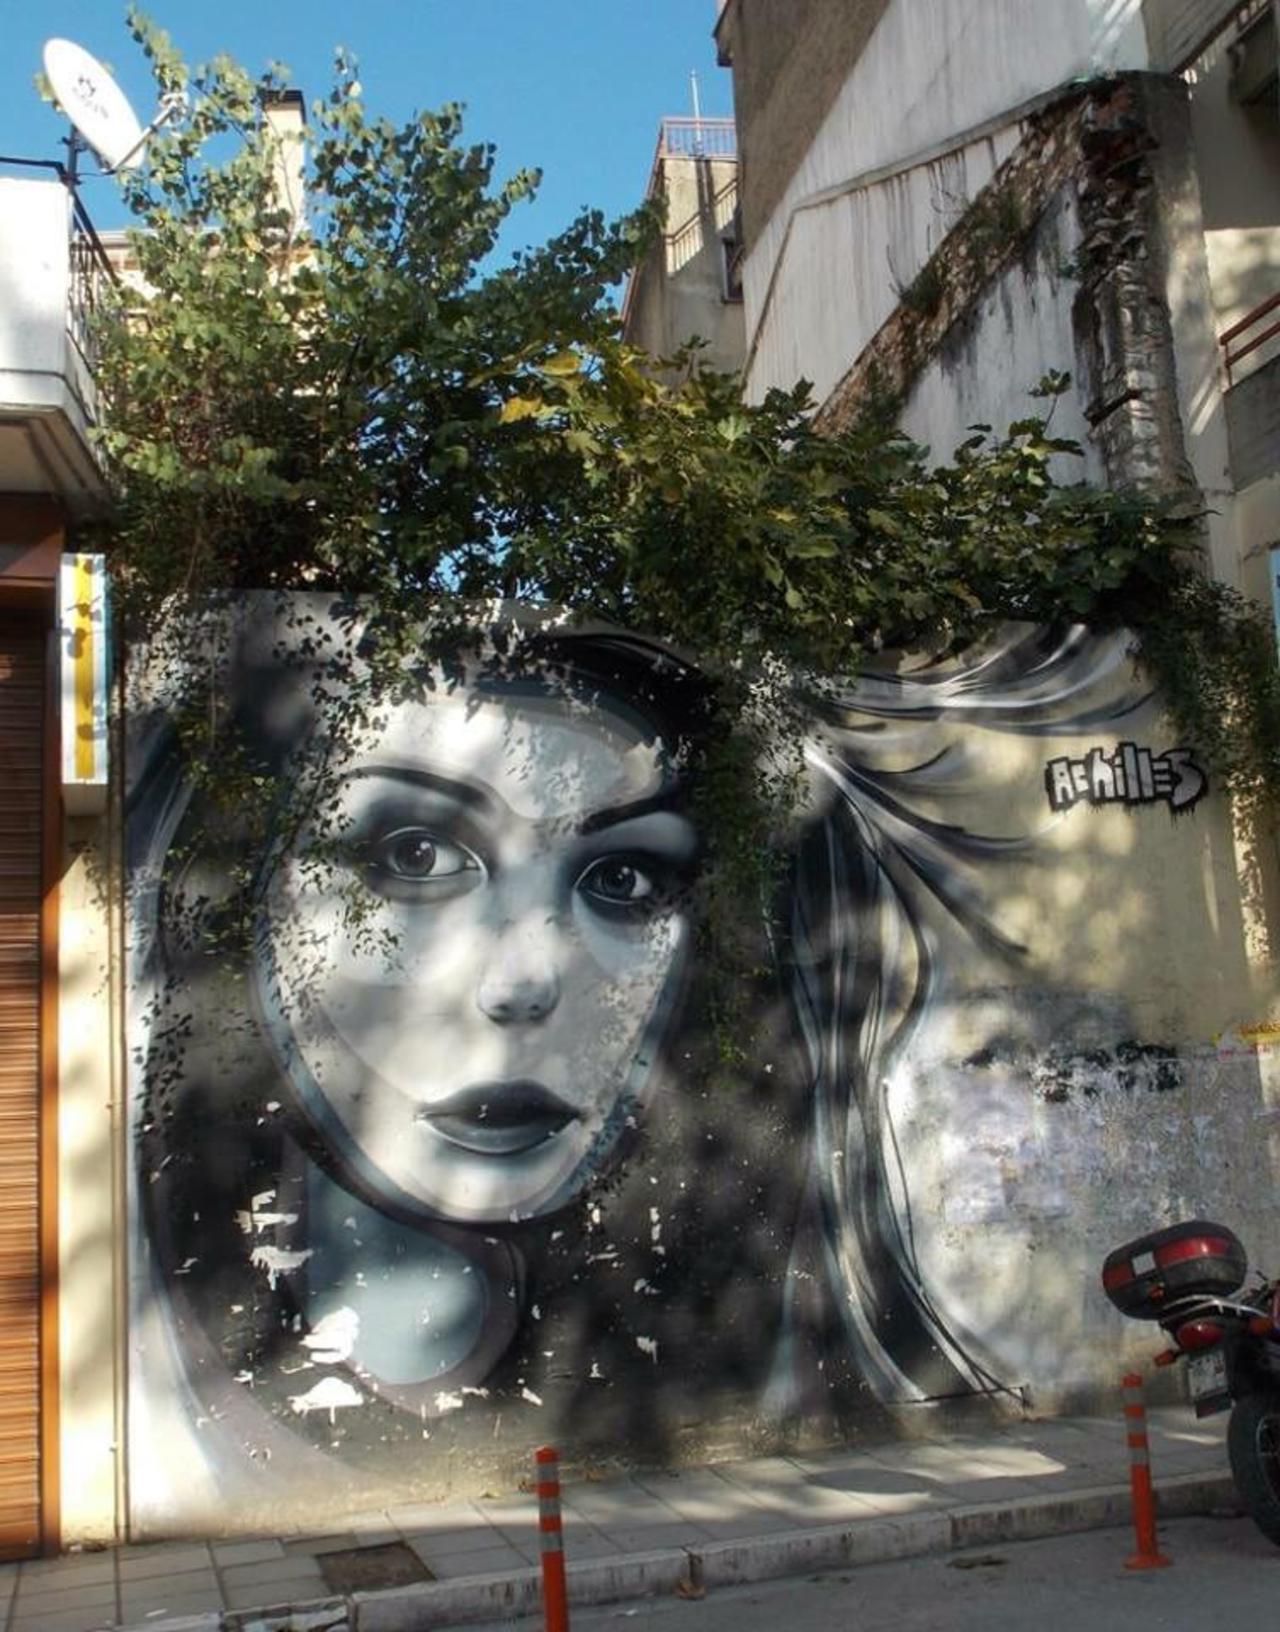 When Street Art meets nature by the artist Achilles 

#art #arte #graffiti #streetart http://t.co/ZnajYVylqJ